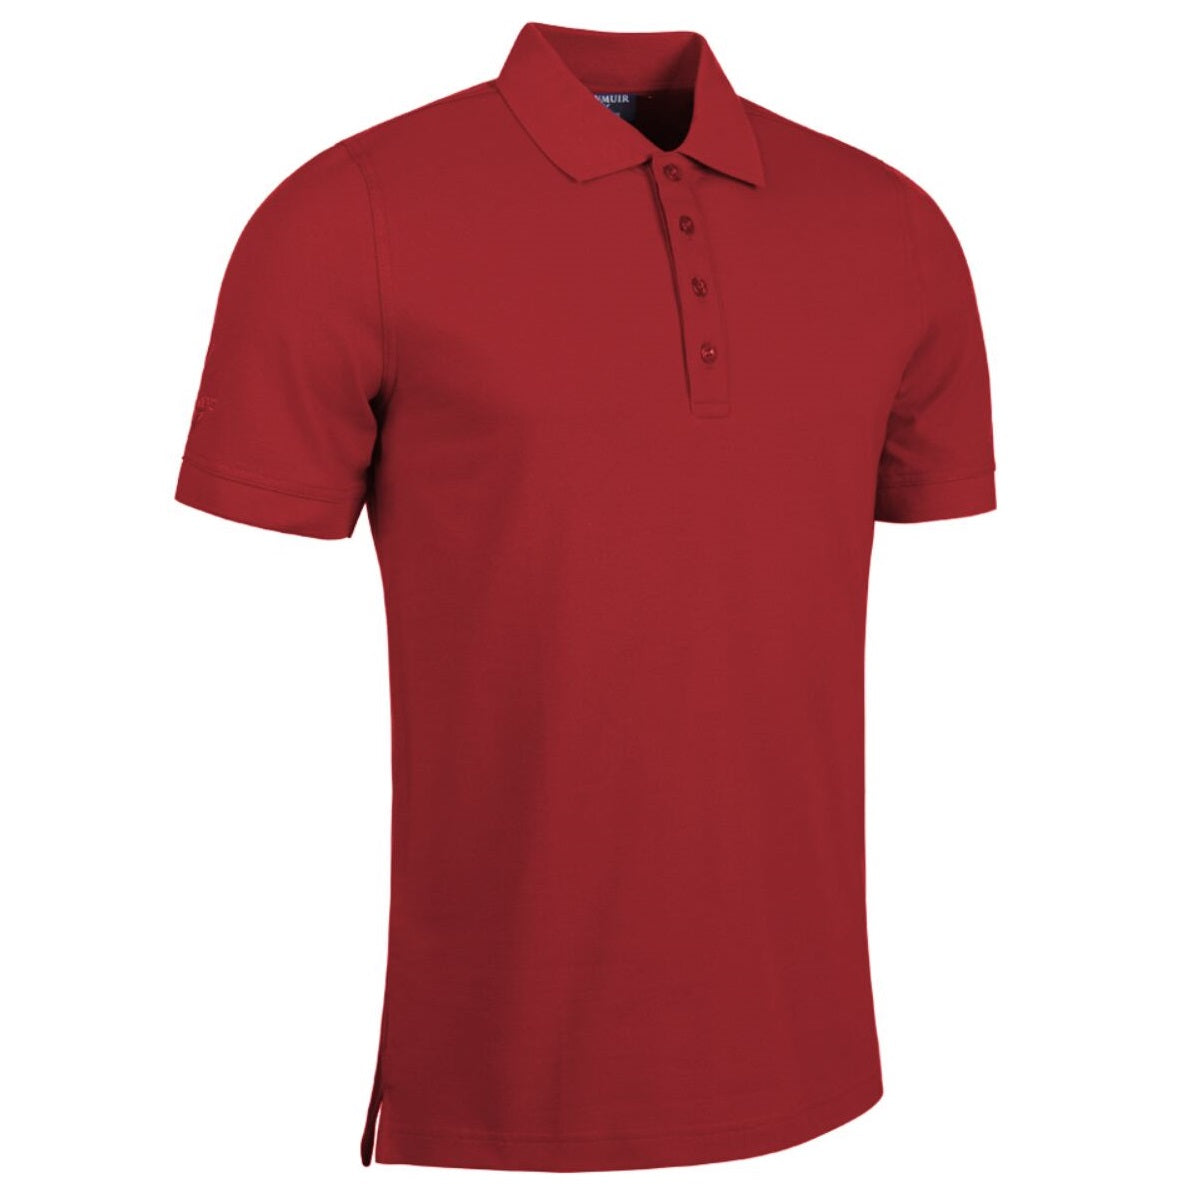 GLENMUIR Kinloch Cotton Pique Polo Shirt - Mens - Garnet